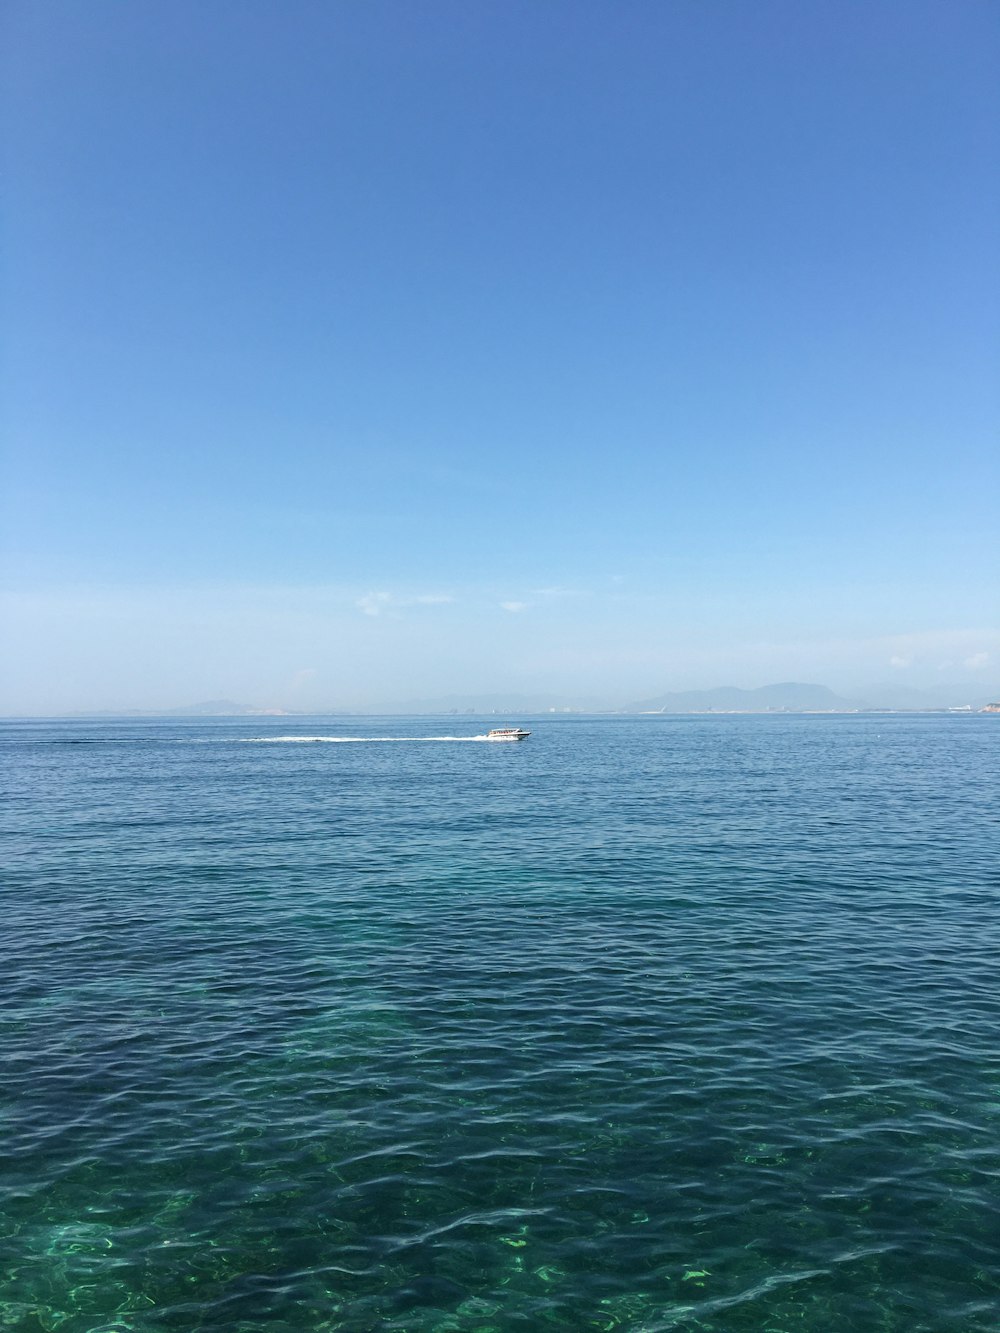 boat on ocean during daytime